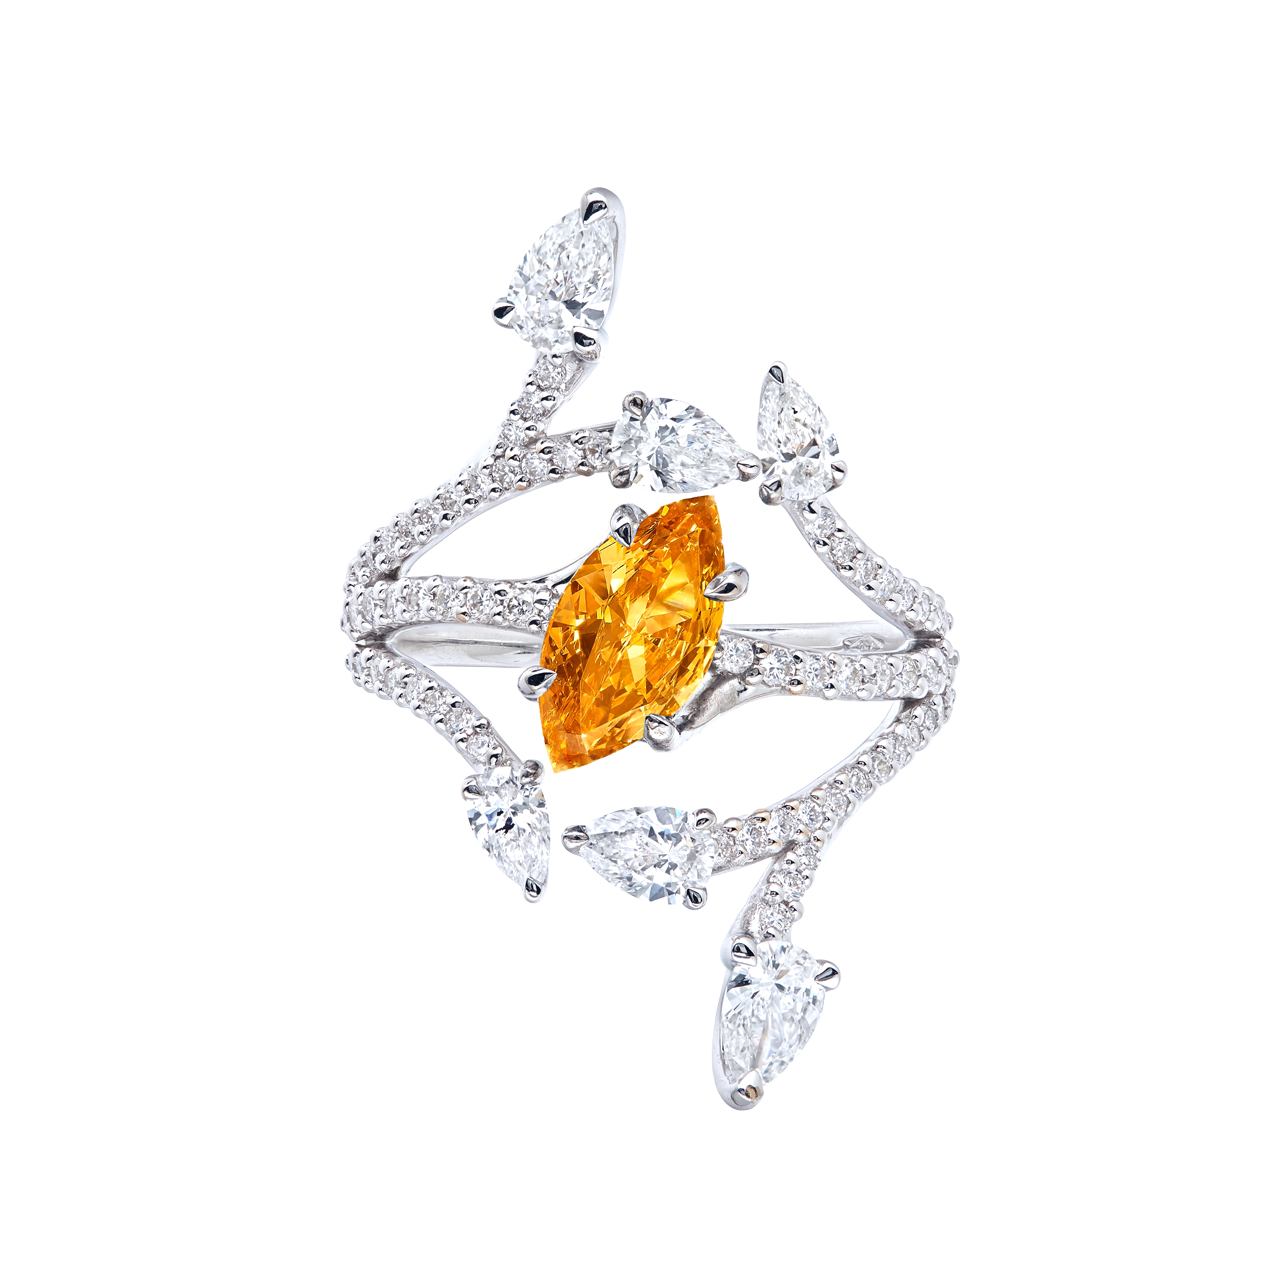 GIA 1.38克拉 深彩馬眼橘鑽戒
Fancy Deep Orange Colored
and Diamond Ring